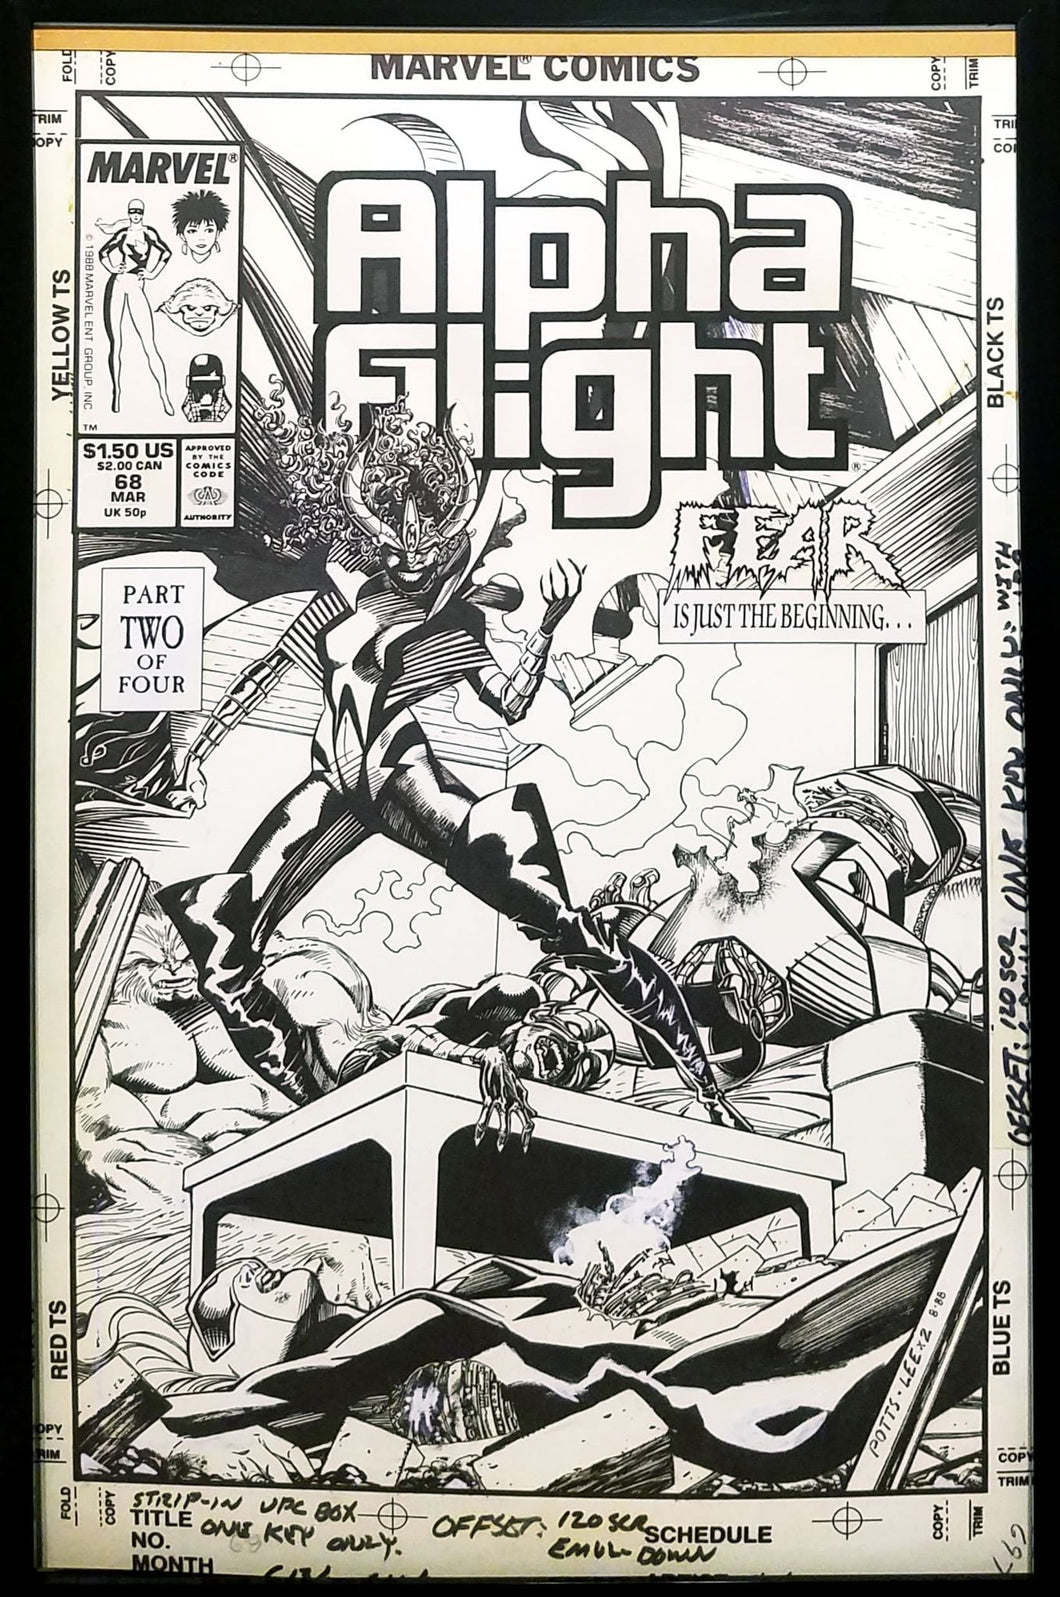 Alpha Flight #68 by Jim Lee 11x17 FRAMED Original Art Poster Marvel Comics